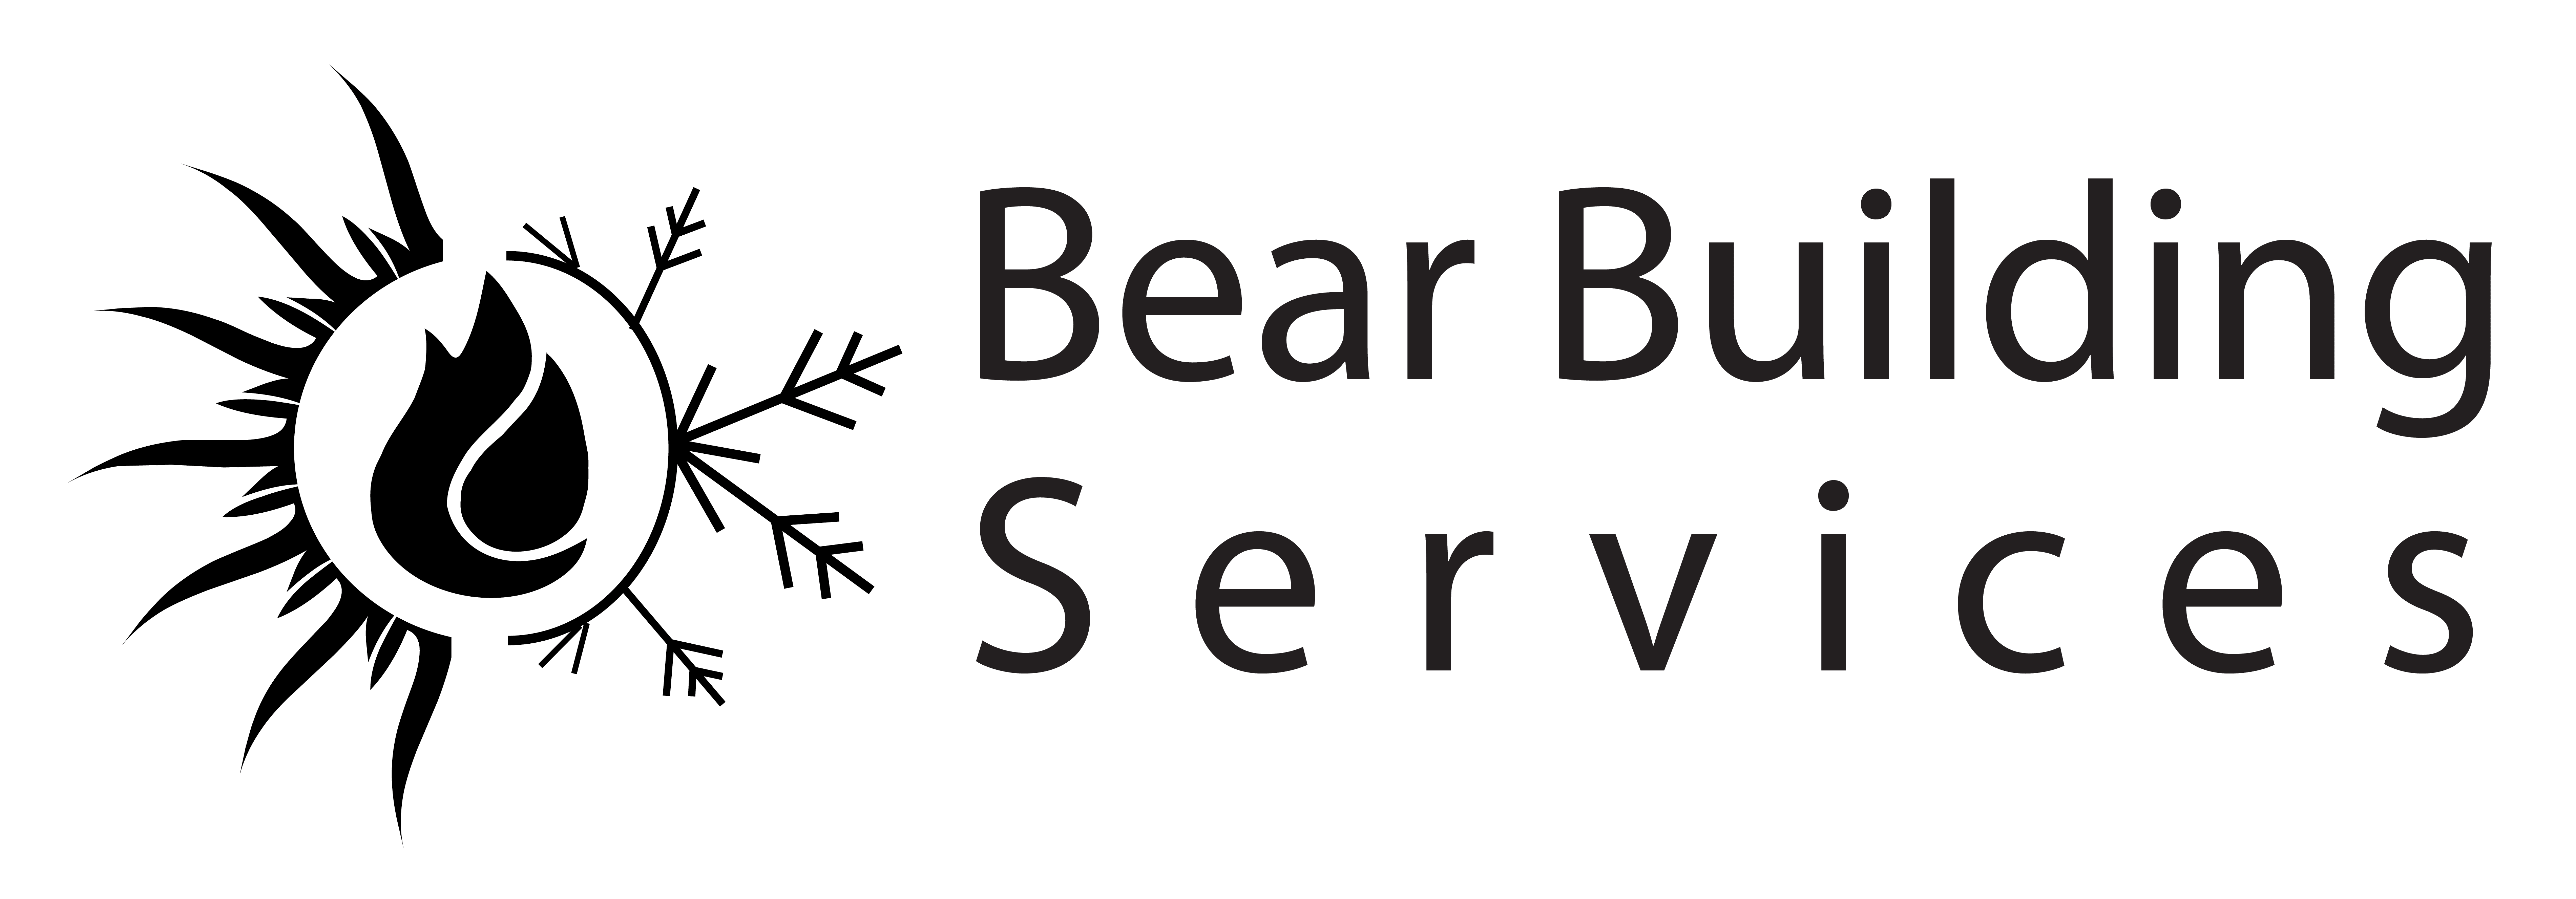 Bear Building Services logo black